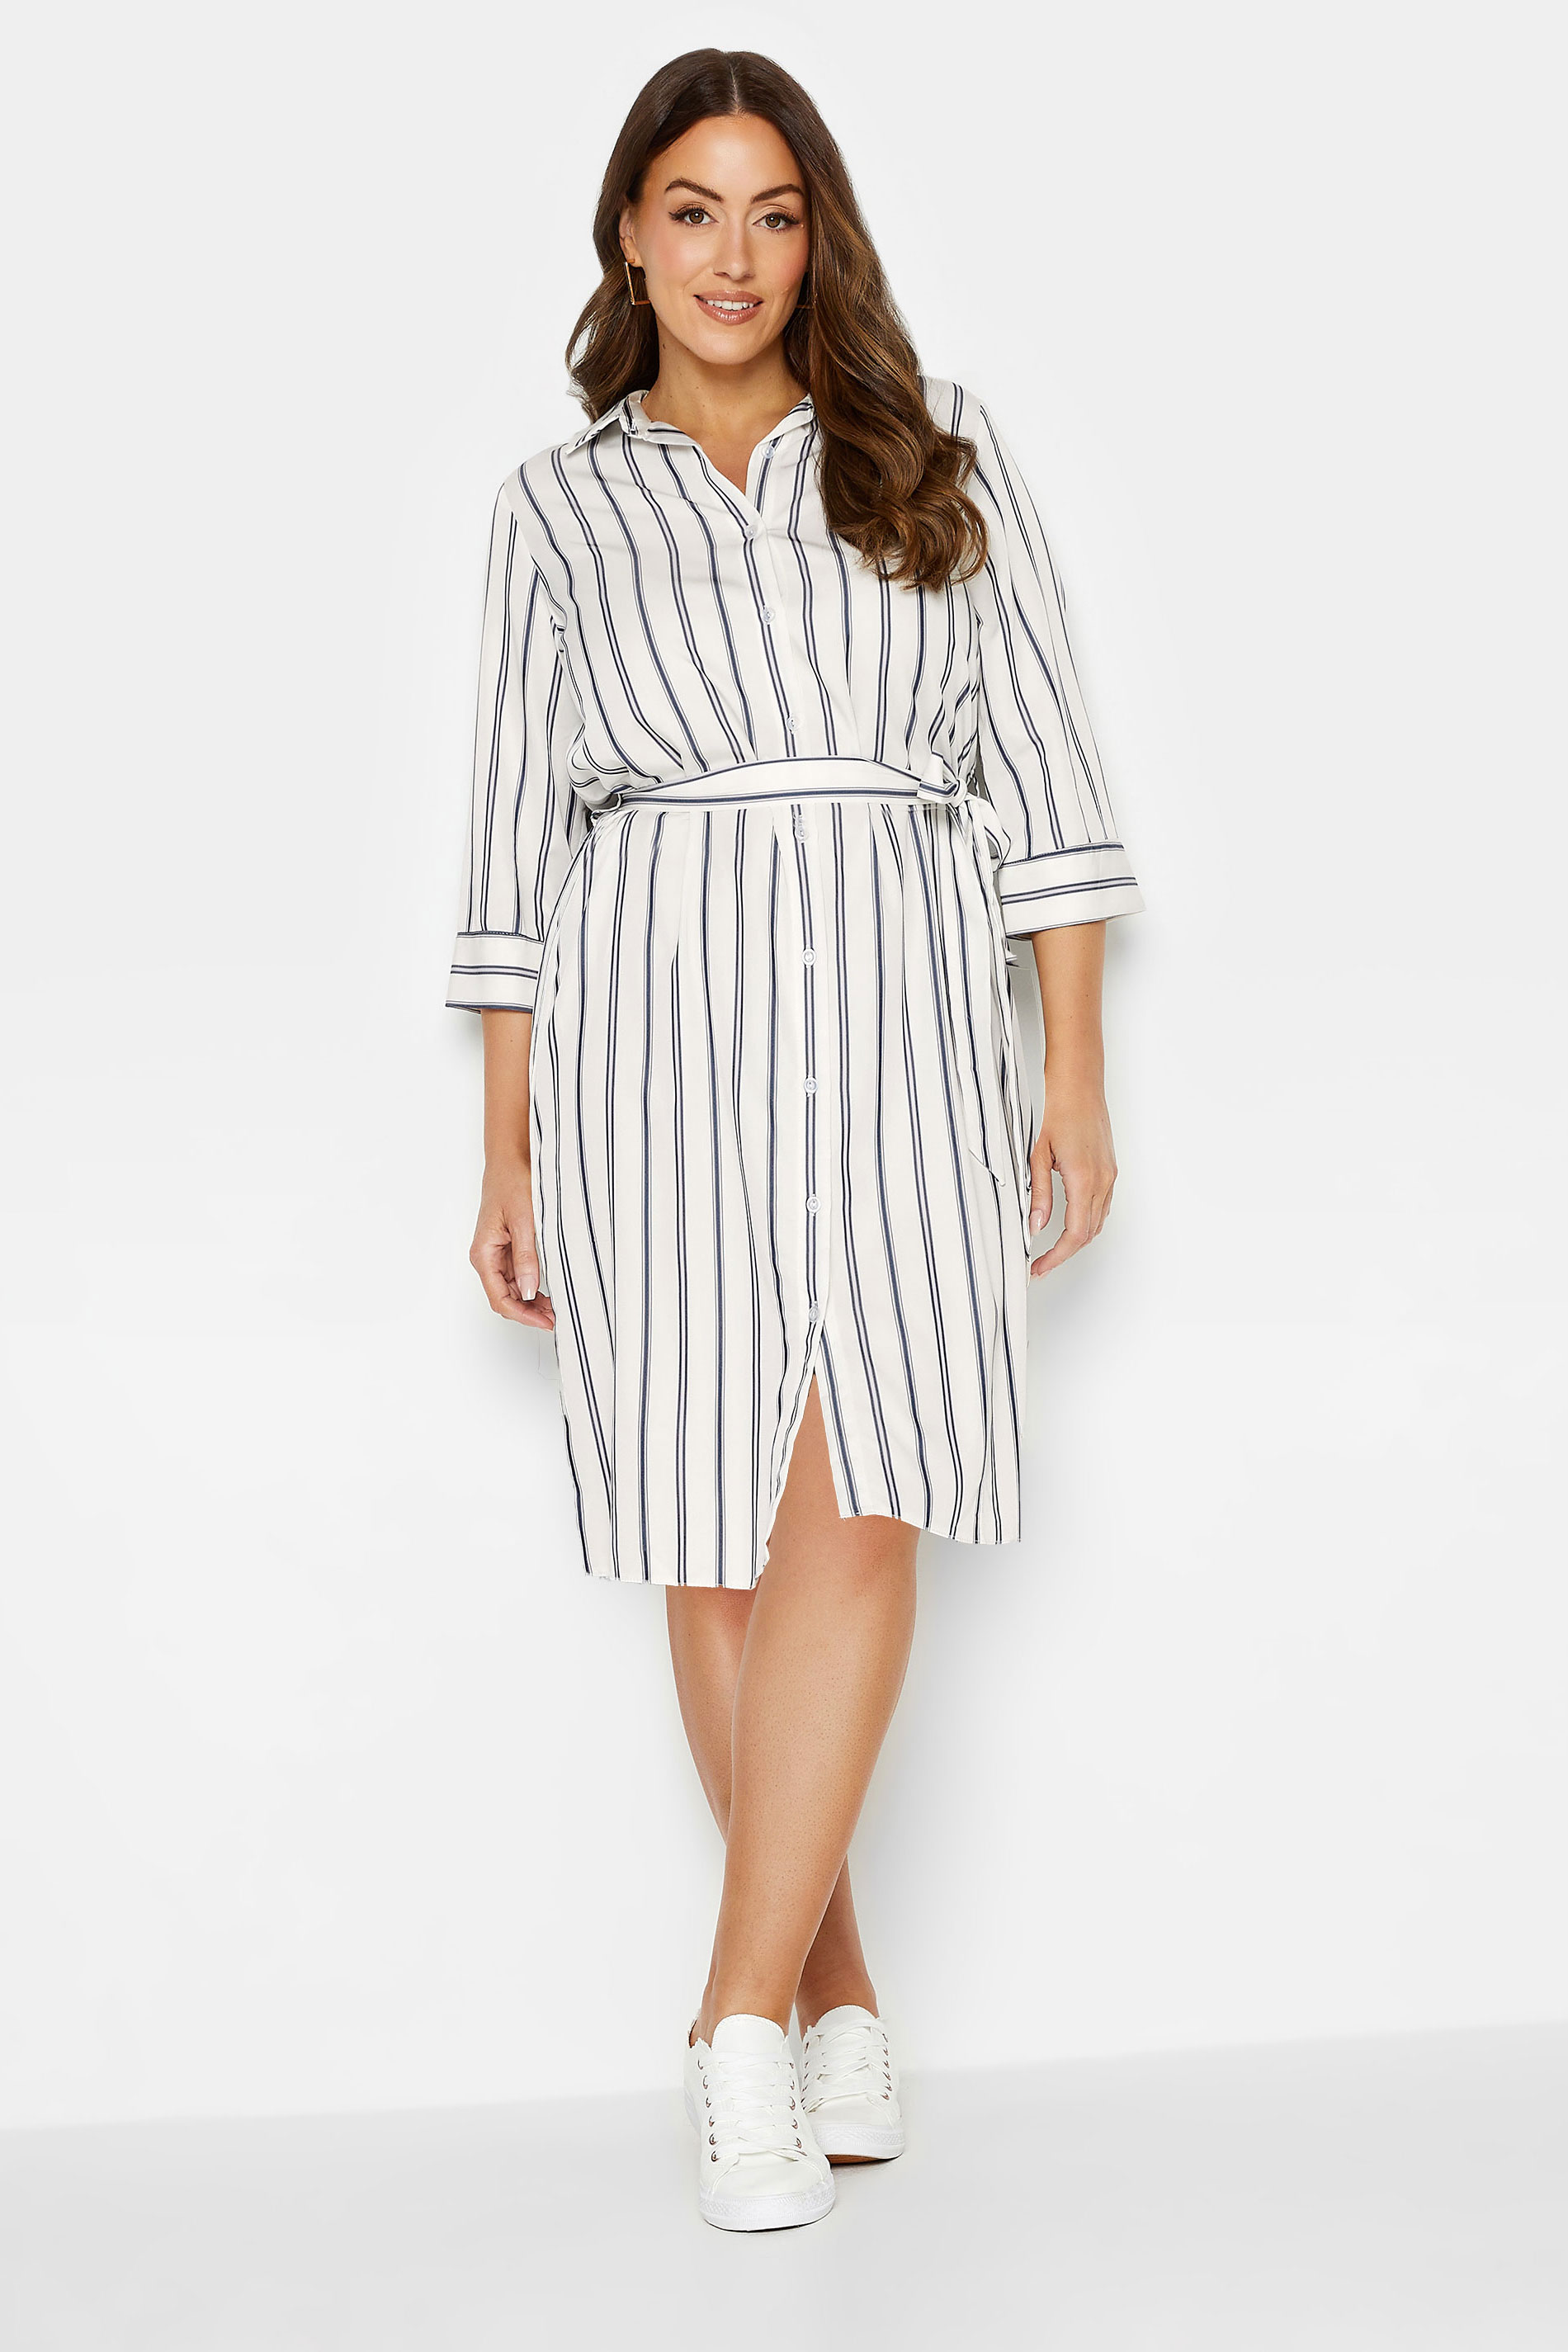 M&Co White & Navy Blue Stripe Print Tie Waist Tunic Shirt Dress | M&Co 2